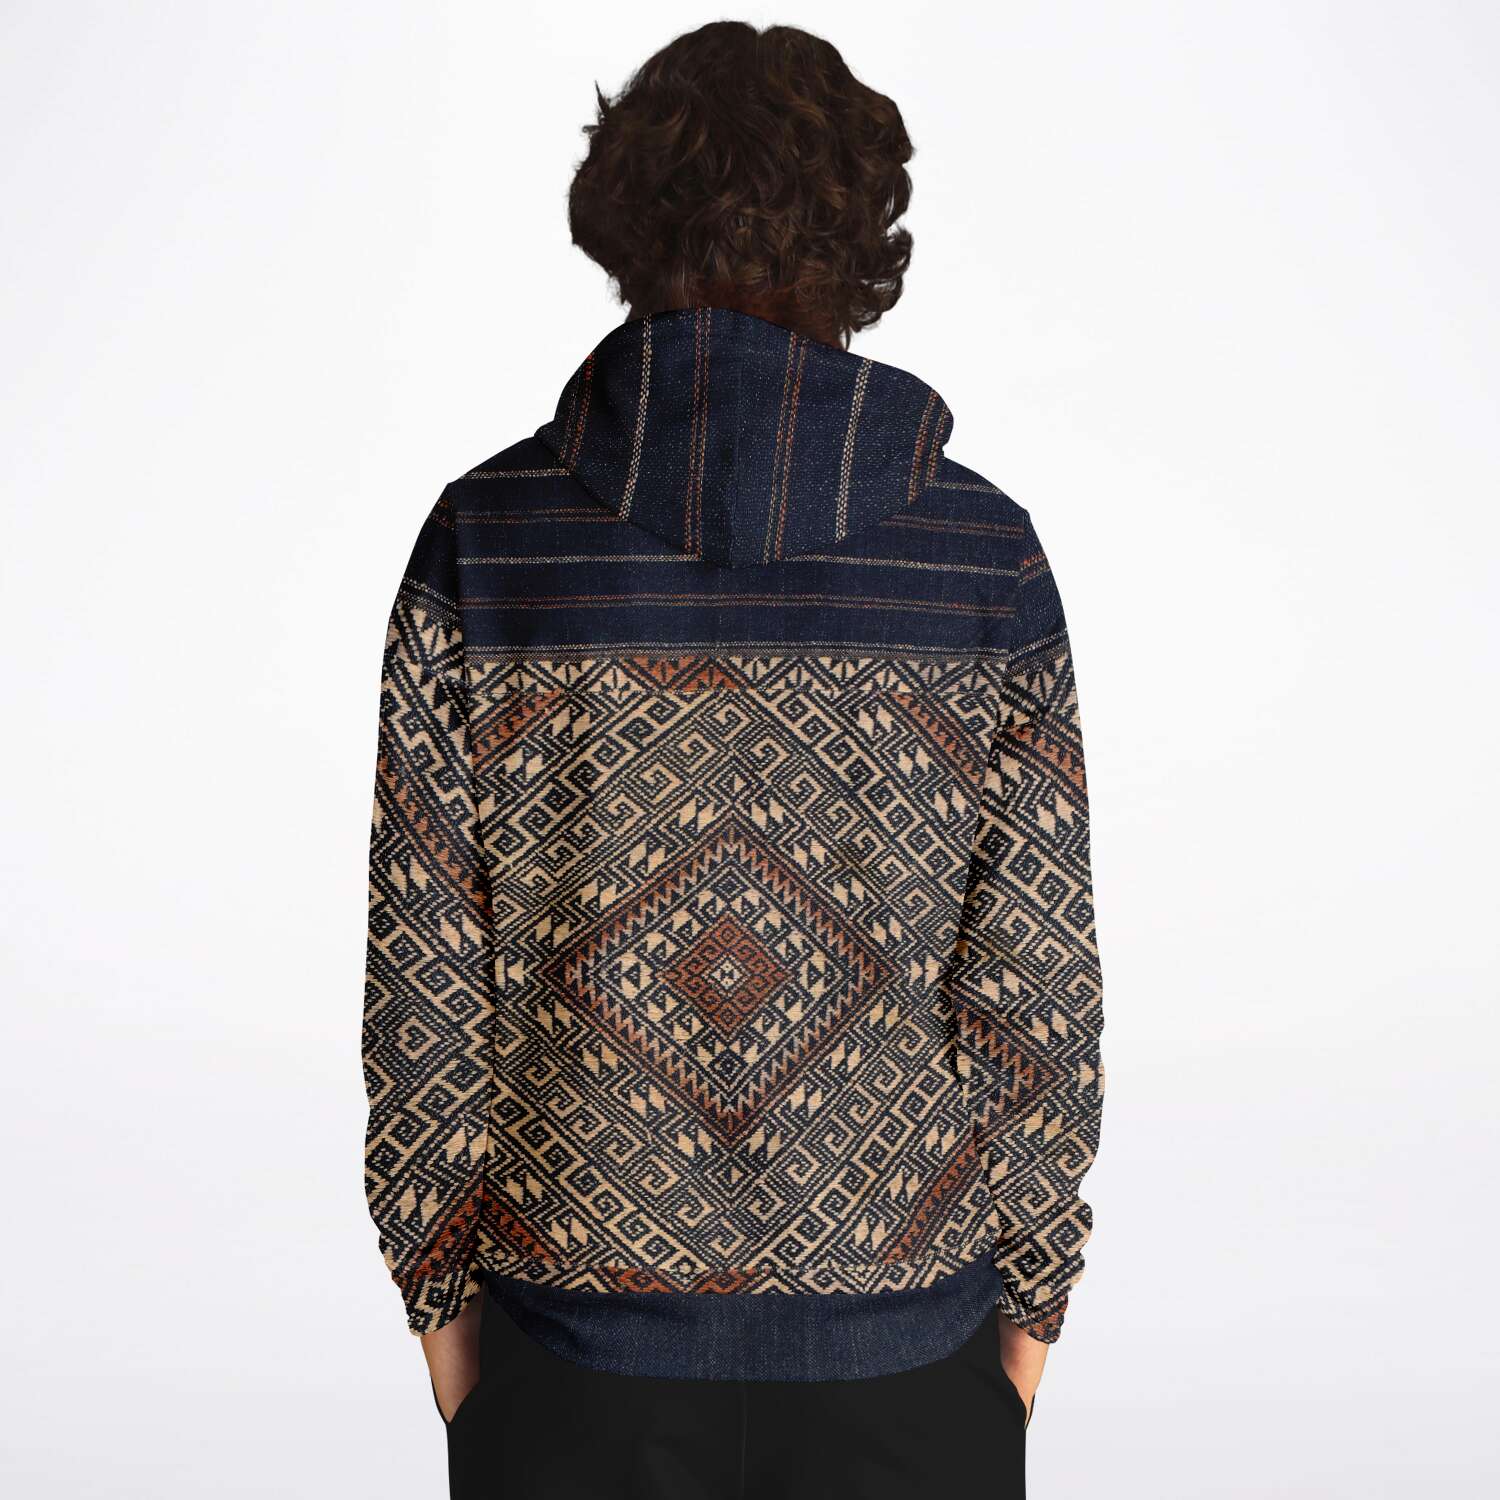 Fashion Hoodie - AOP Rare Miao Traditional Textile | SE Asian Batik Ikat Vintage Gift | Boho Kuba, Kilim, Ethnic Shaman Jacket | Pullover Tribal Hoodie